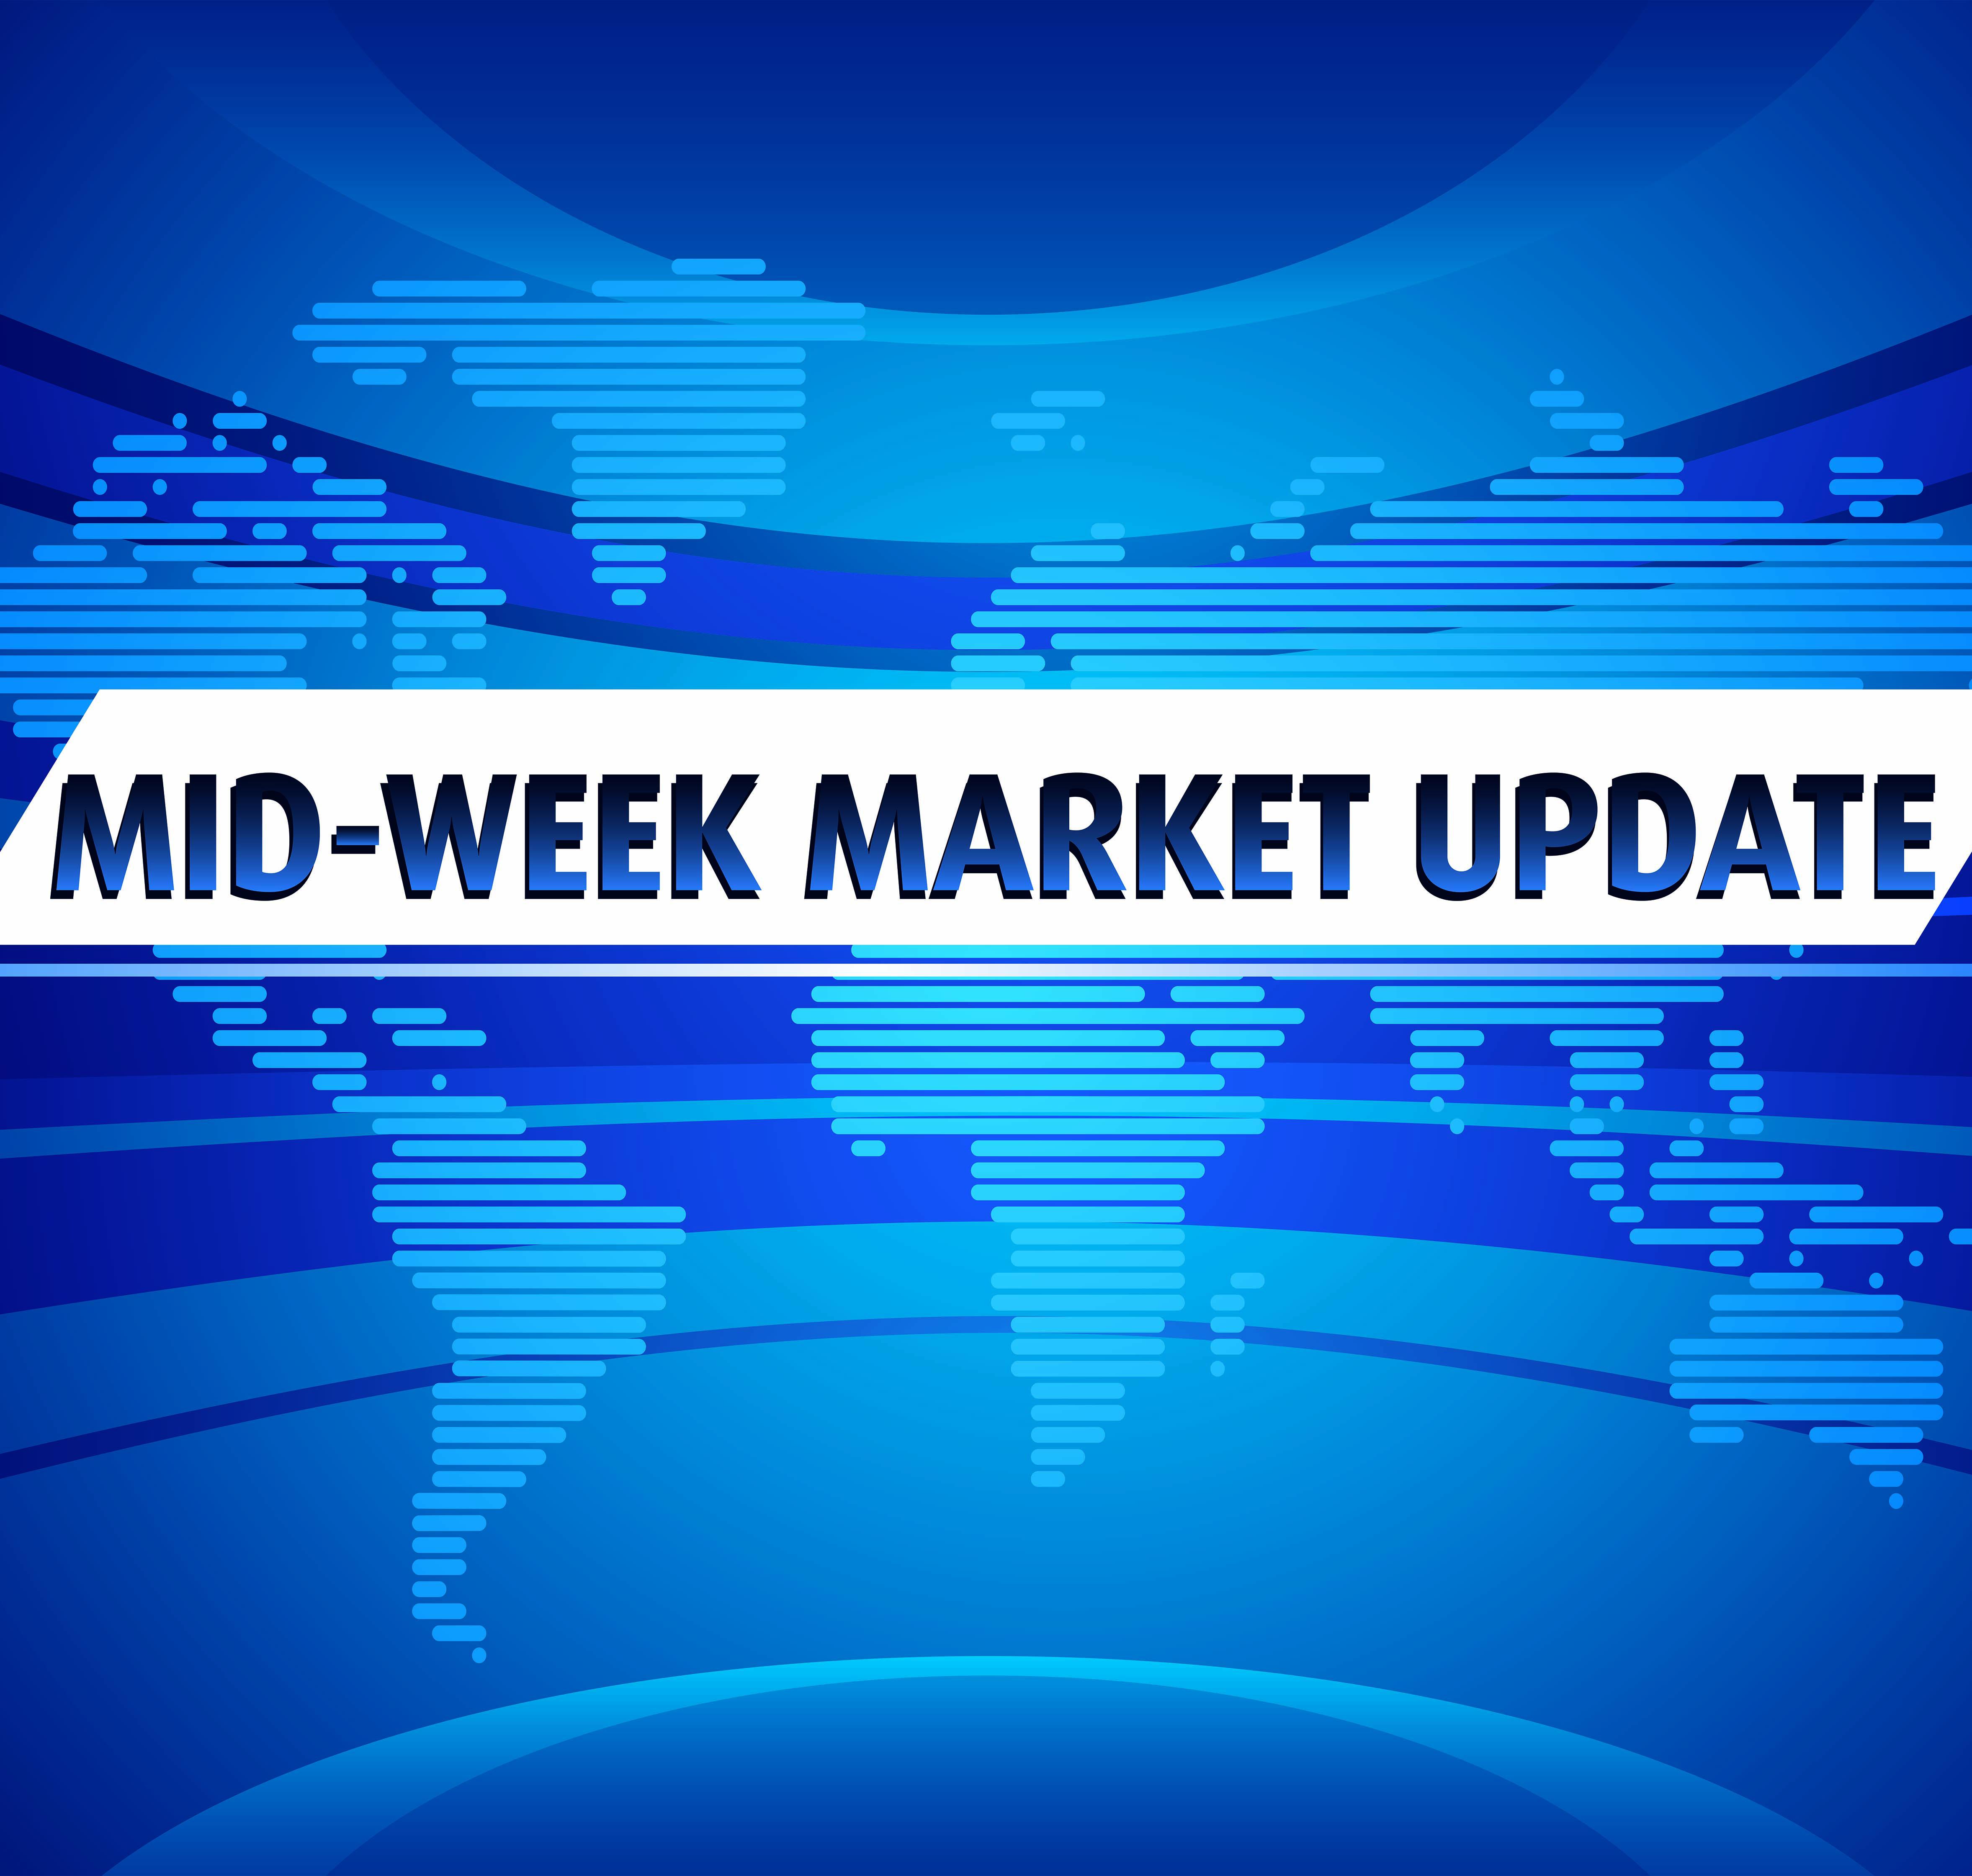 Mid-week Market Update